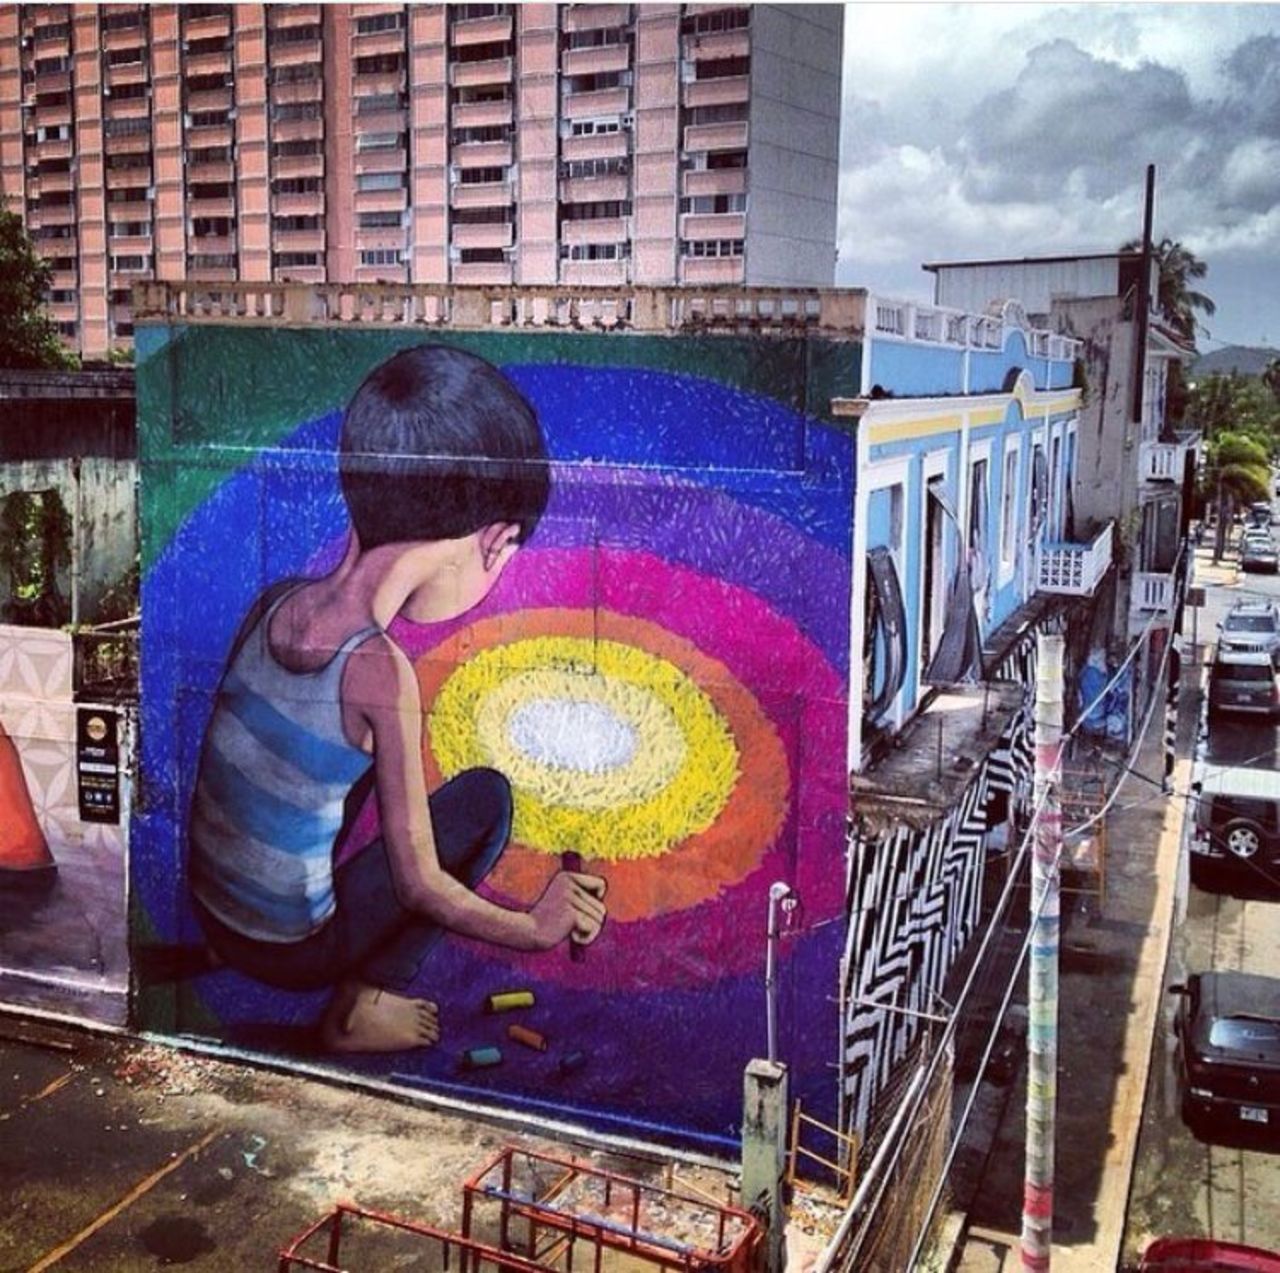 New work by Seth Globepainter #streetart #mural #graffiti #art https://t.co/hJ5Y5zAenI